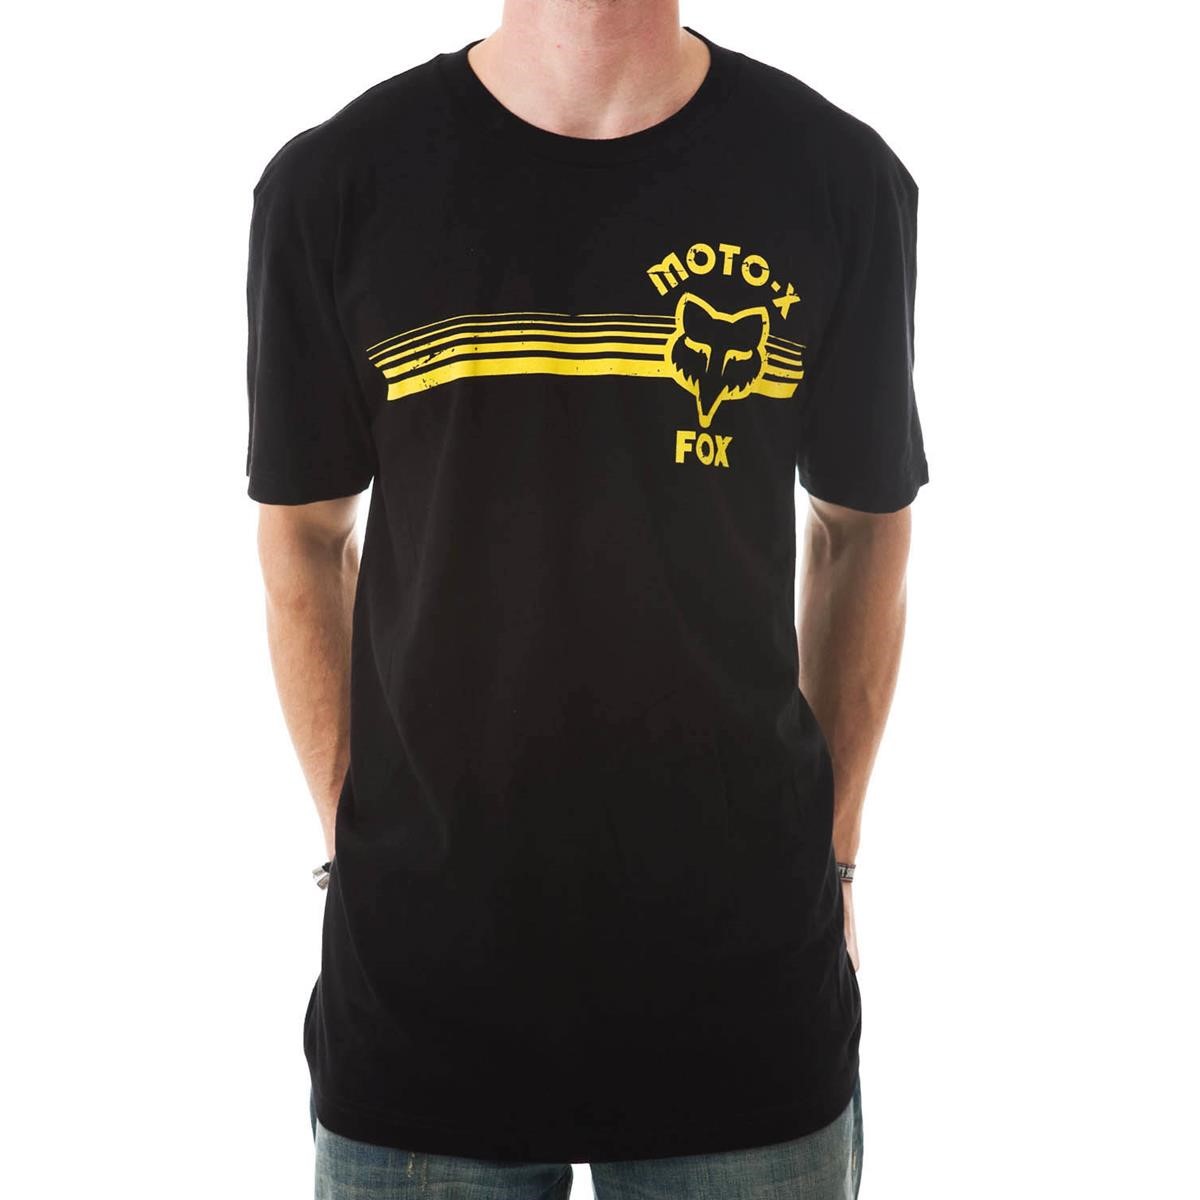 Freizeit/Streetwear Bekleidung-T-Shirts/Polos - Fox T-Shirt Liberty Black